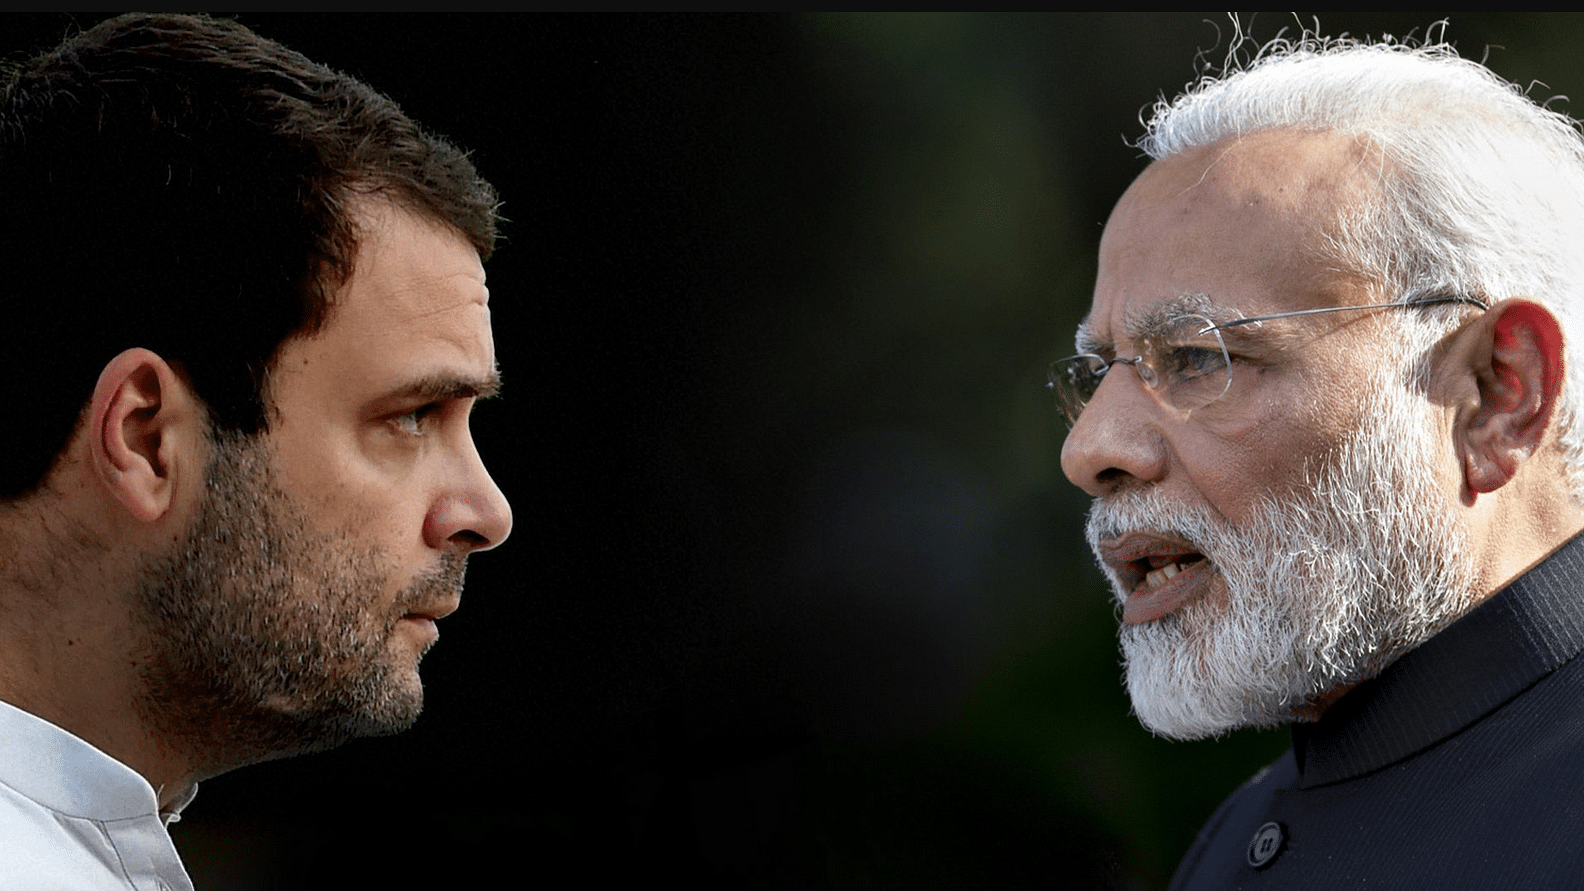 Congress leader Rahul Gandhi and Prime Minister Modi